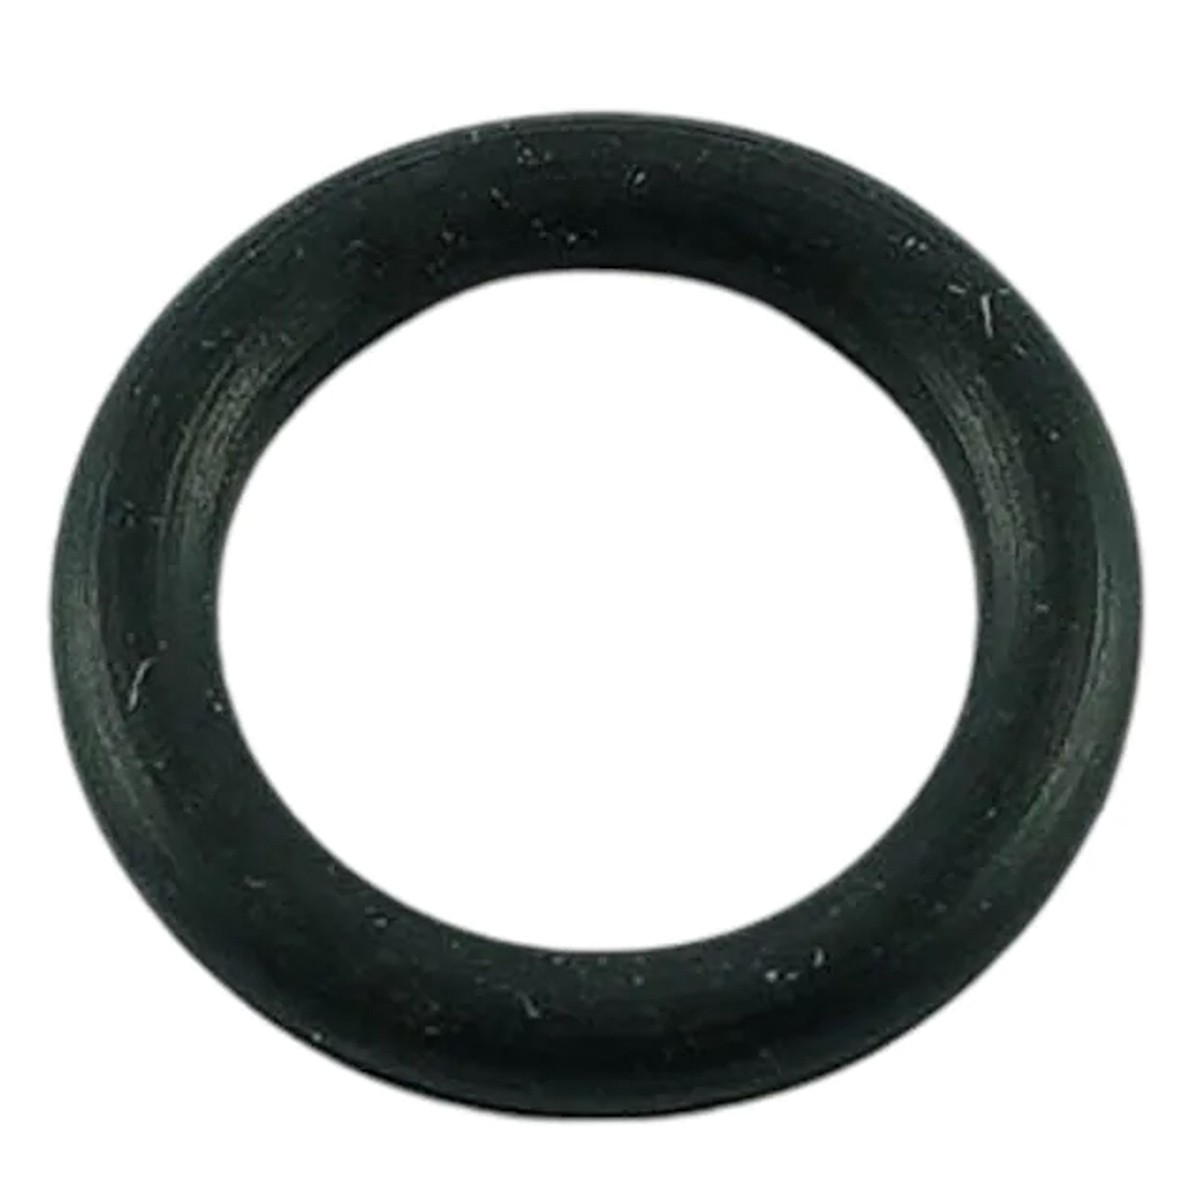 O-ring 6.50 x 1.5 mm / LS XJ25 / S804007010 / S31A6210319 / 31A6200319 / 40029237 / 40223872